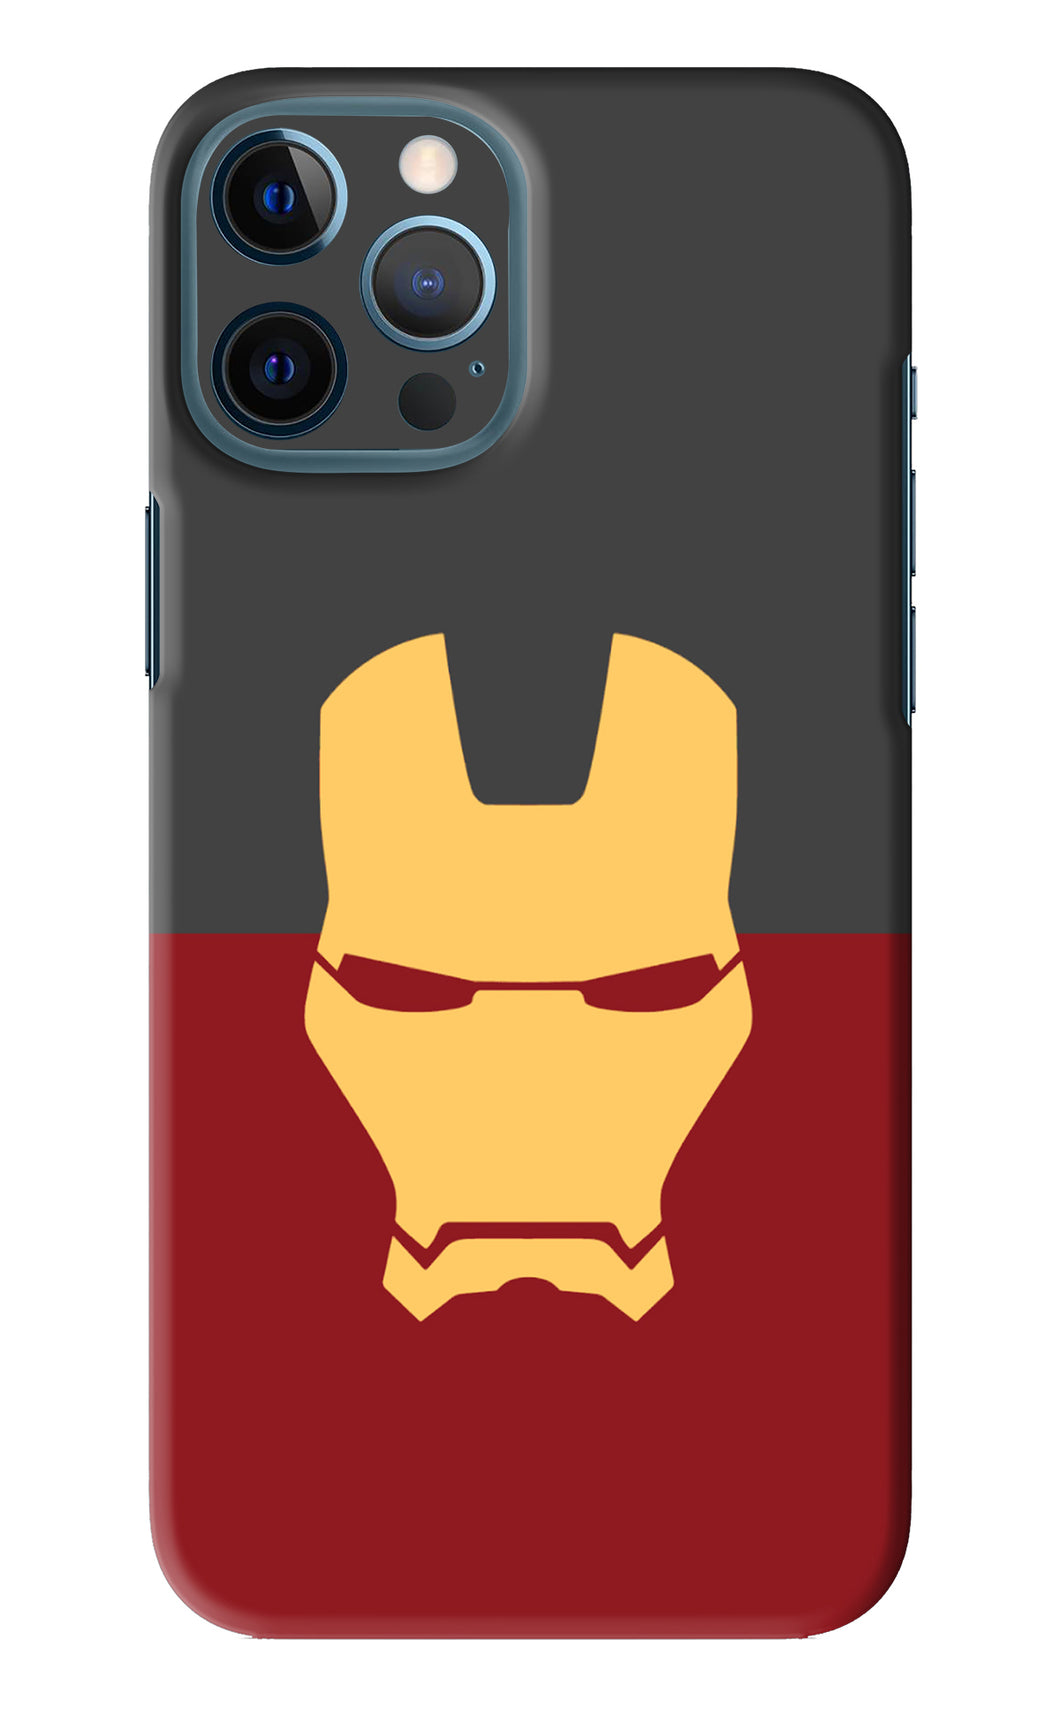 Ironman iPhone 12 Pro Max Back Skin Wrap